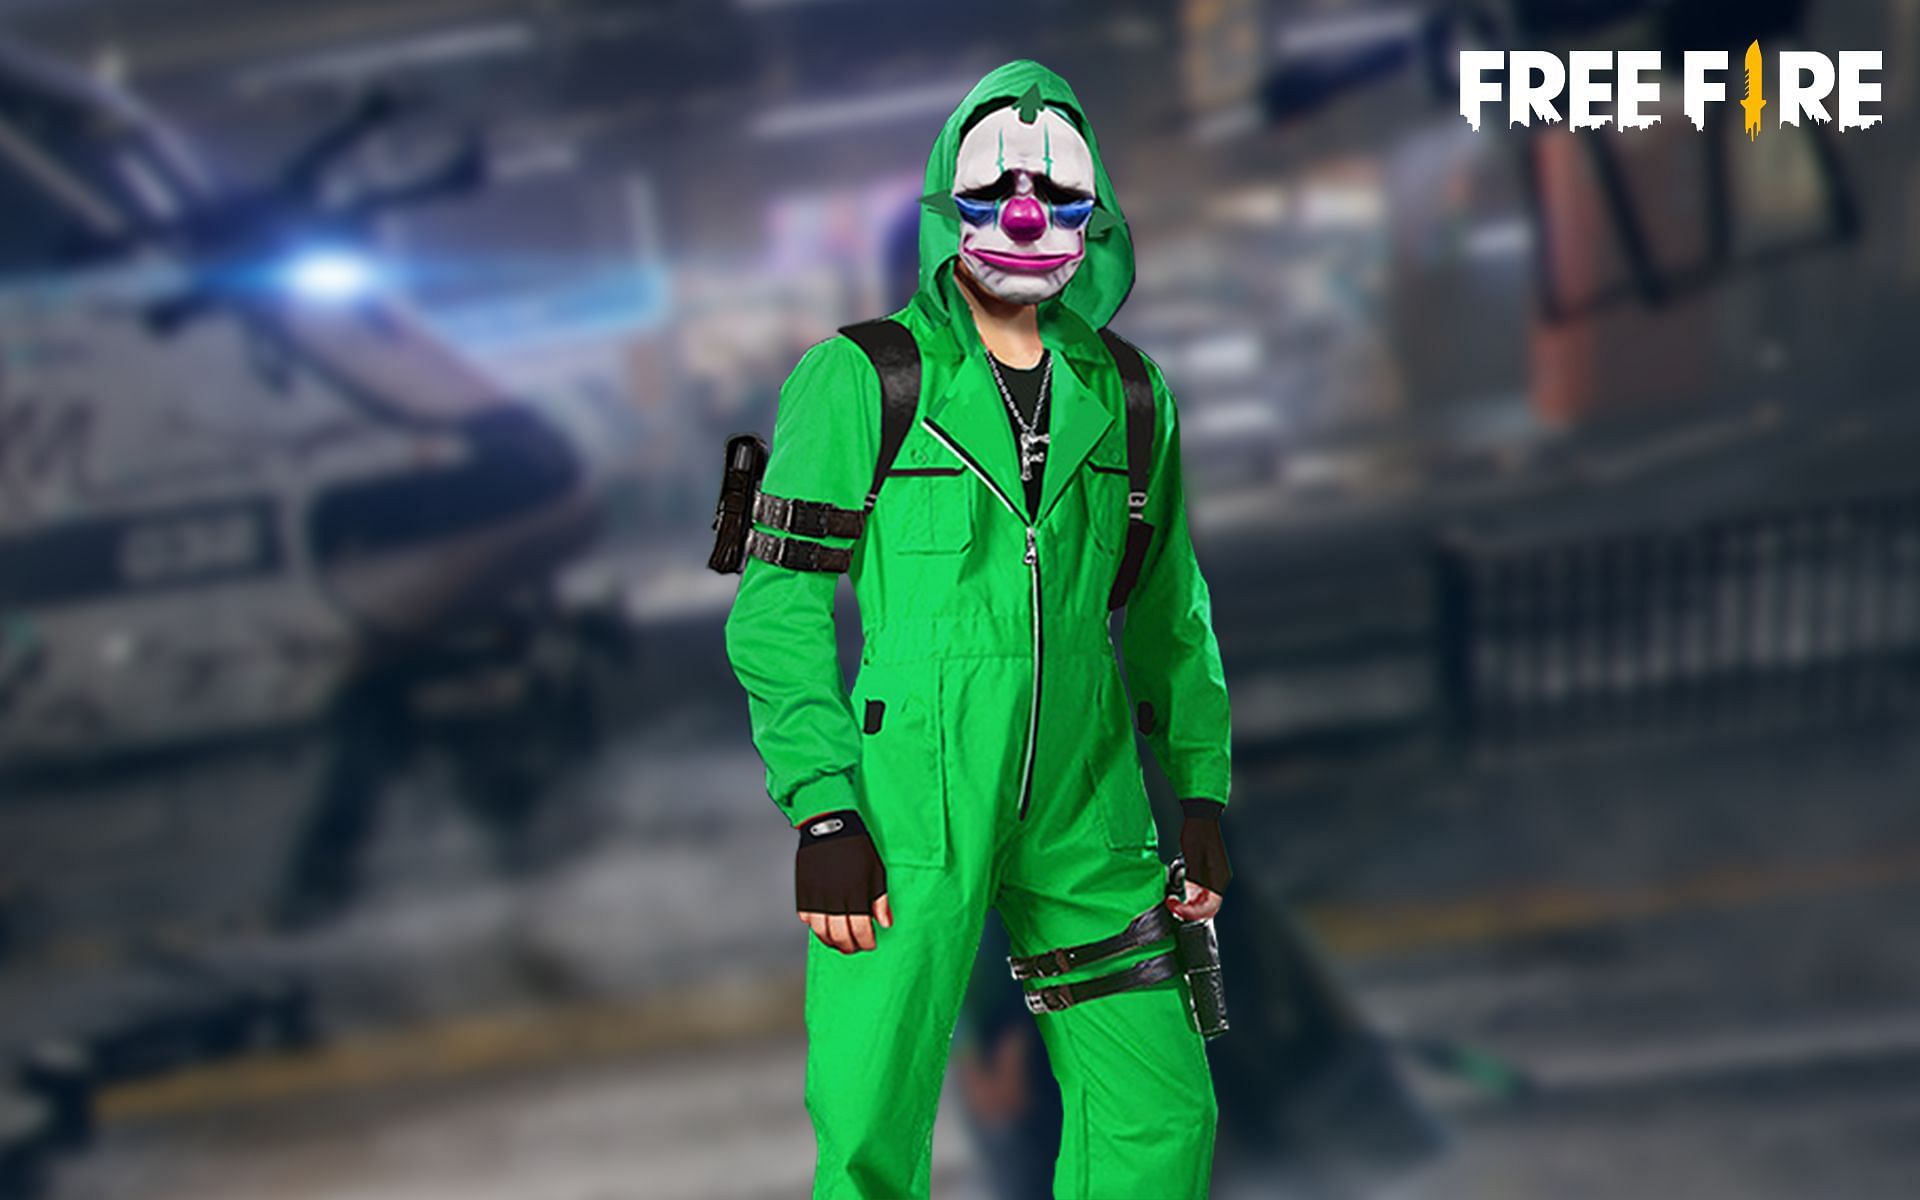 Green Criminal is a rare costume bundle in Garena Free Fire (Image via Sportskeeda)